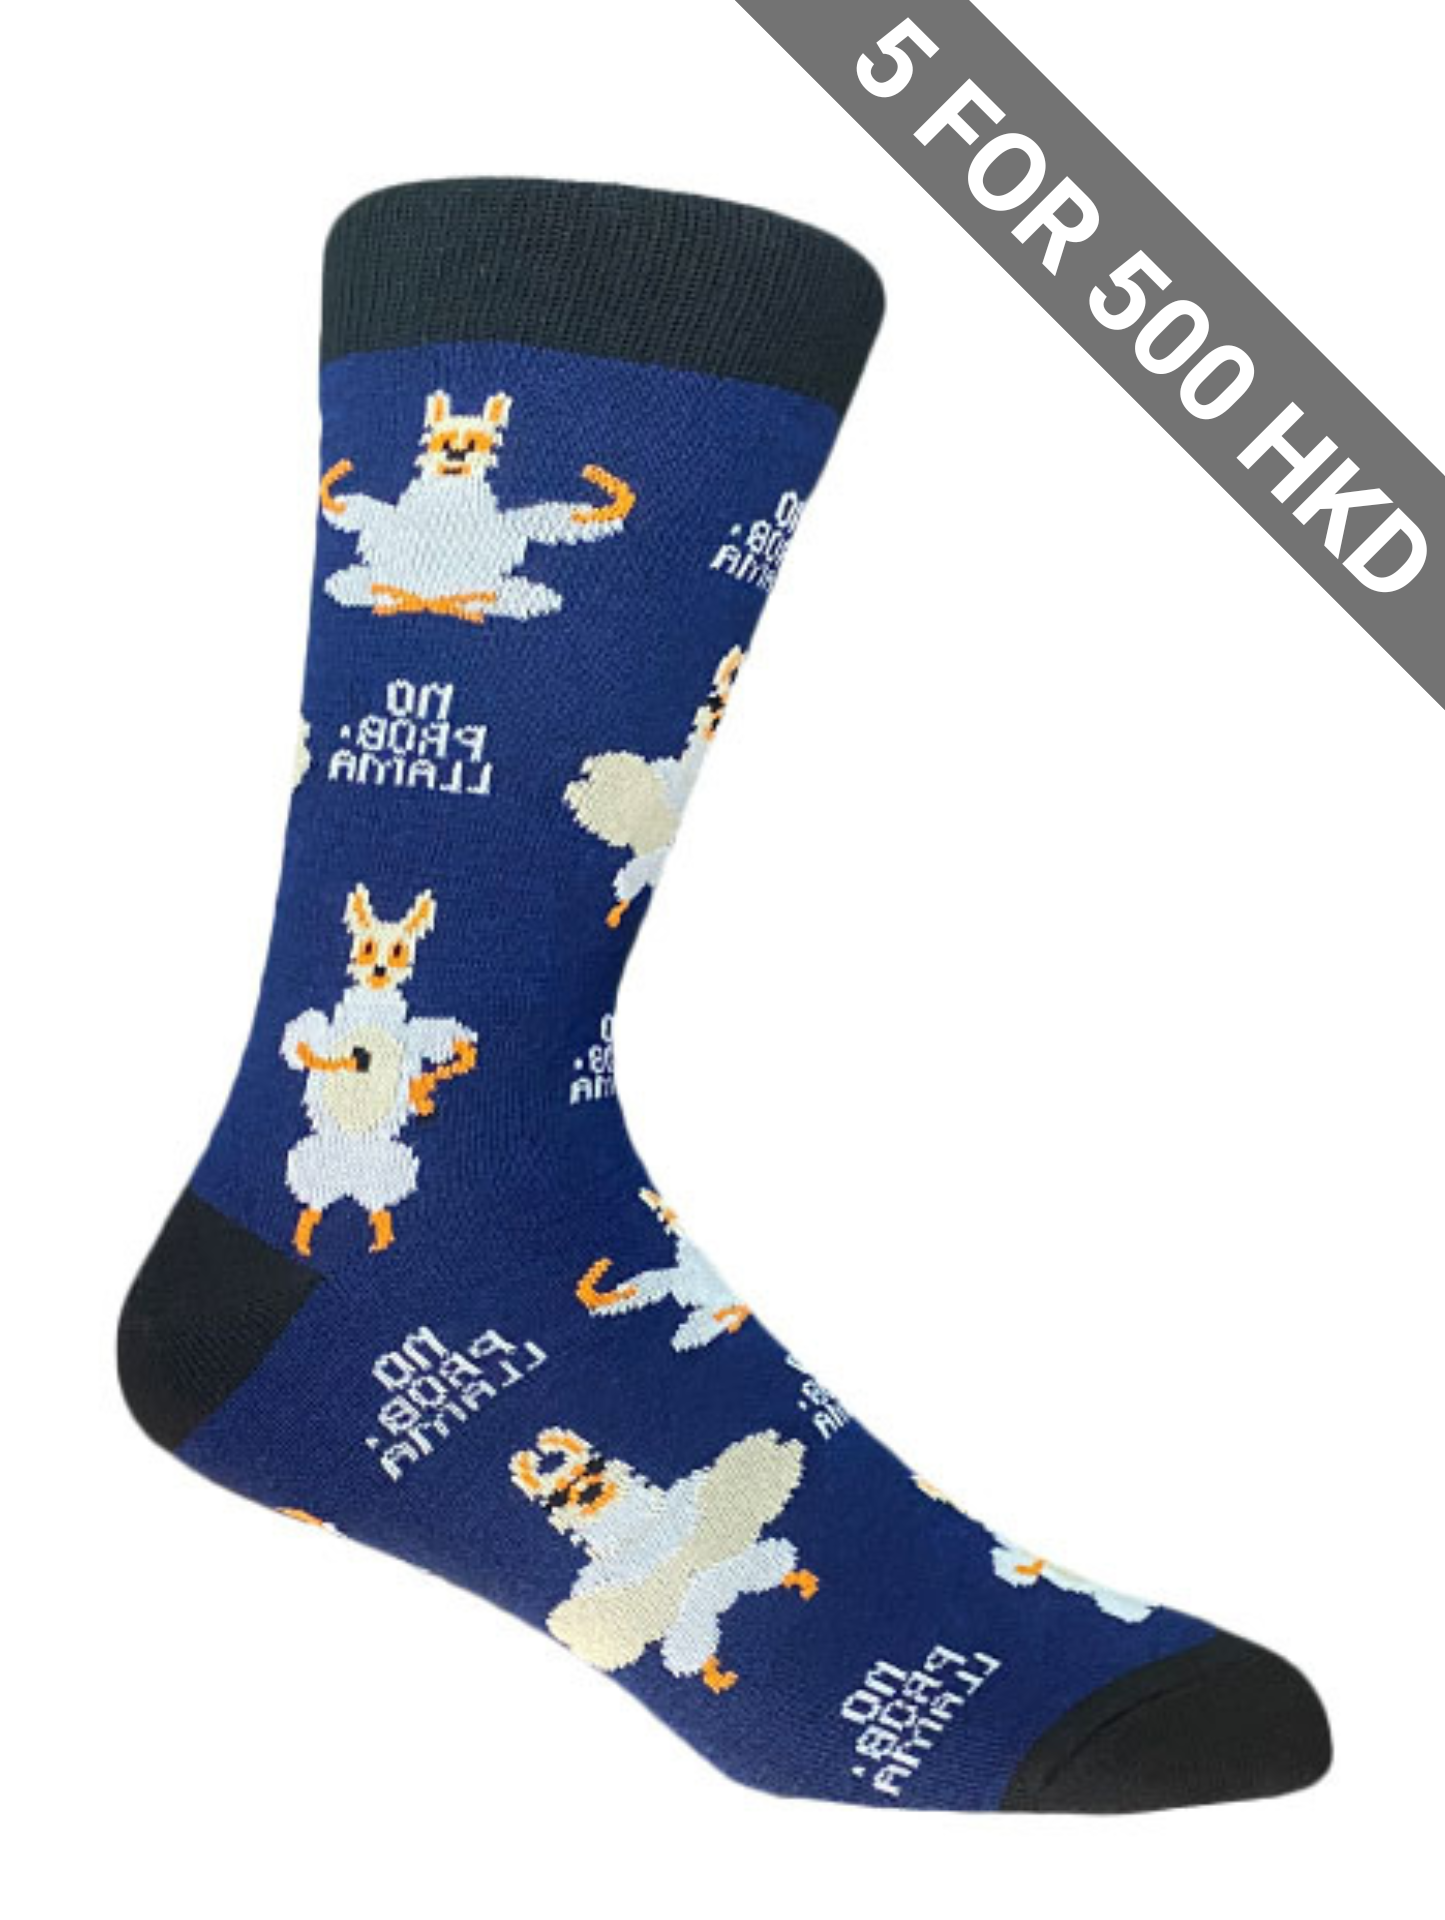 Socks | No prob Llama | Cotton